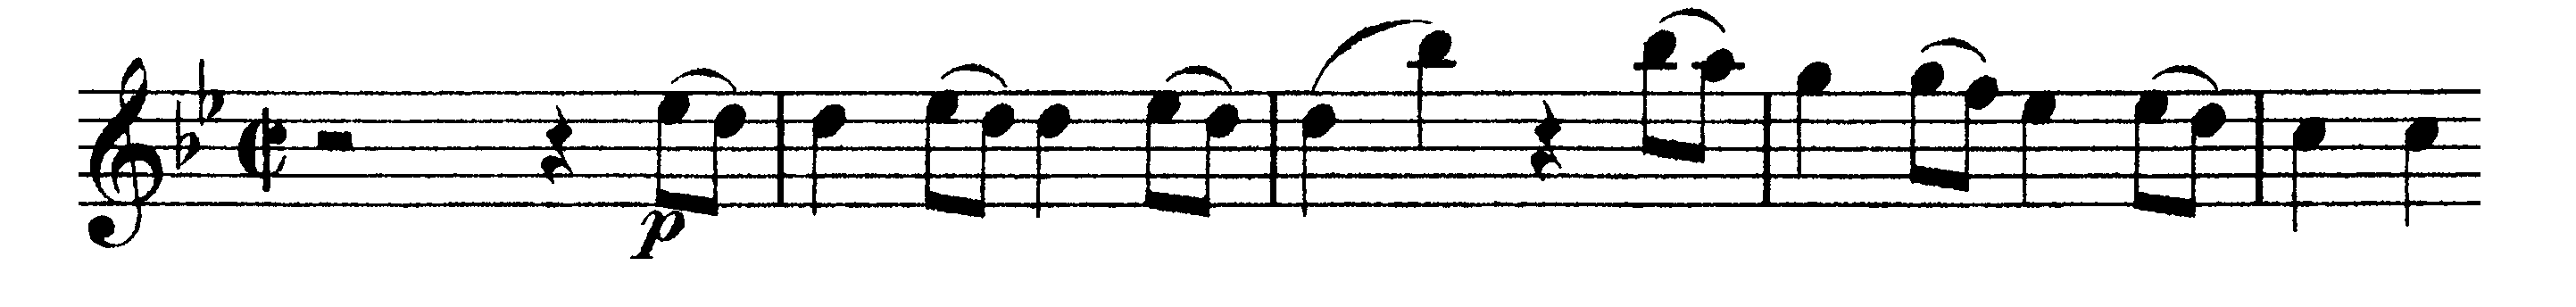 Notexempel, symfoni 40:I